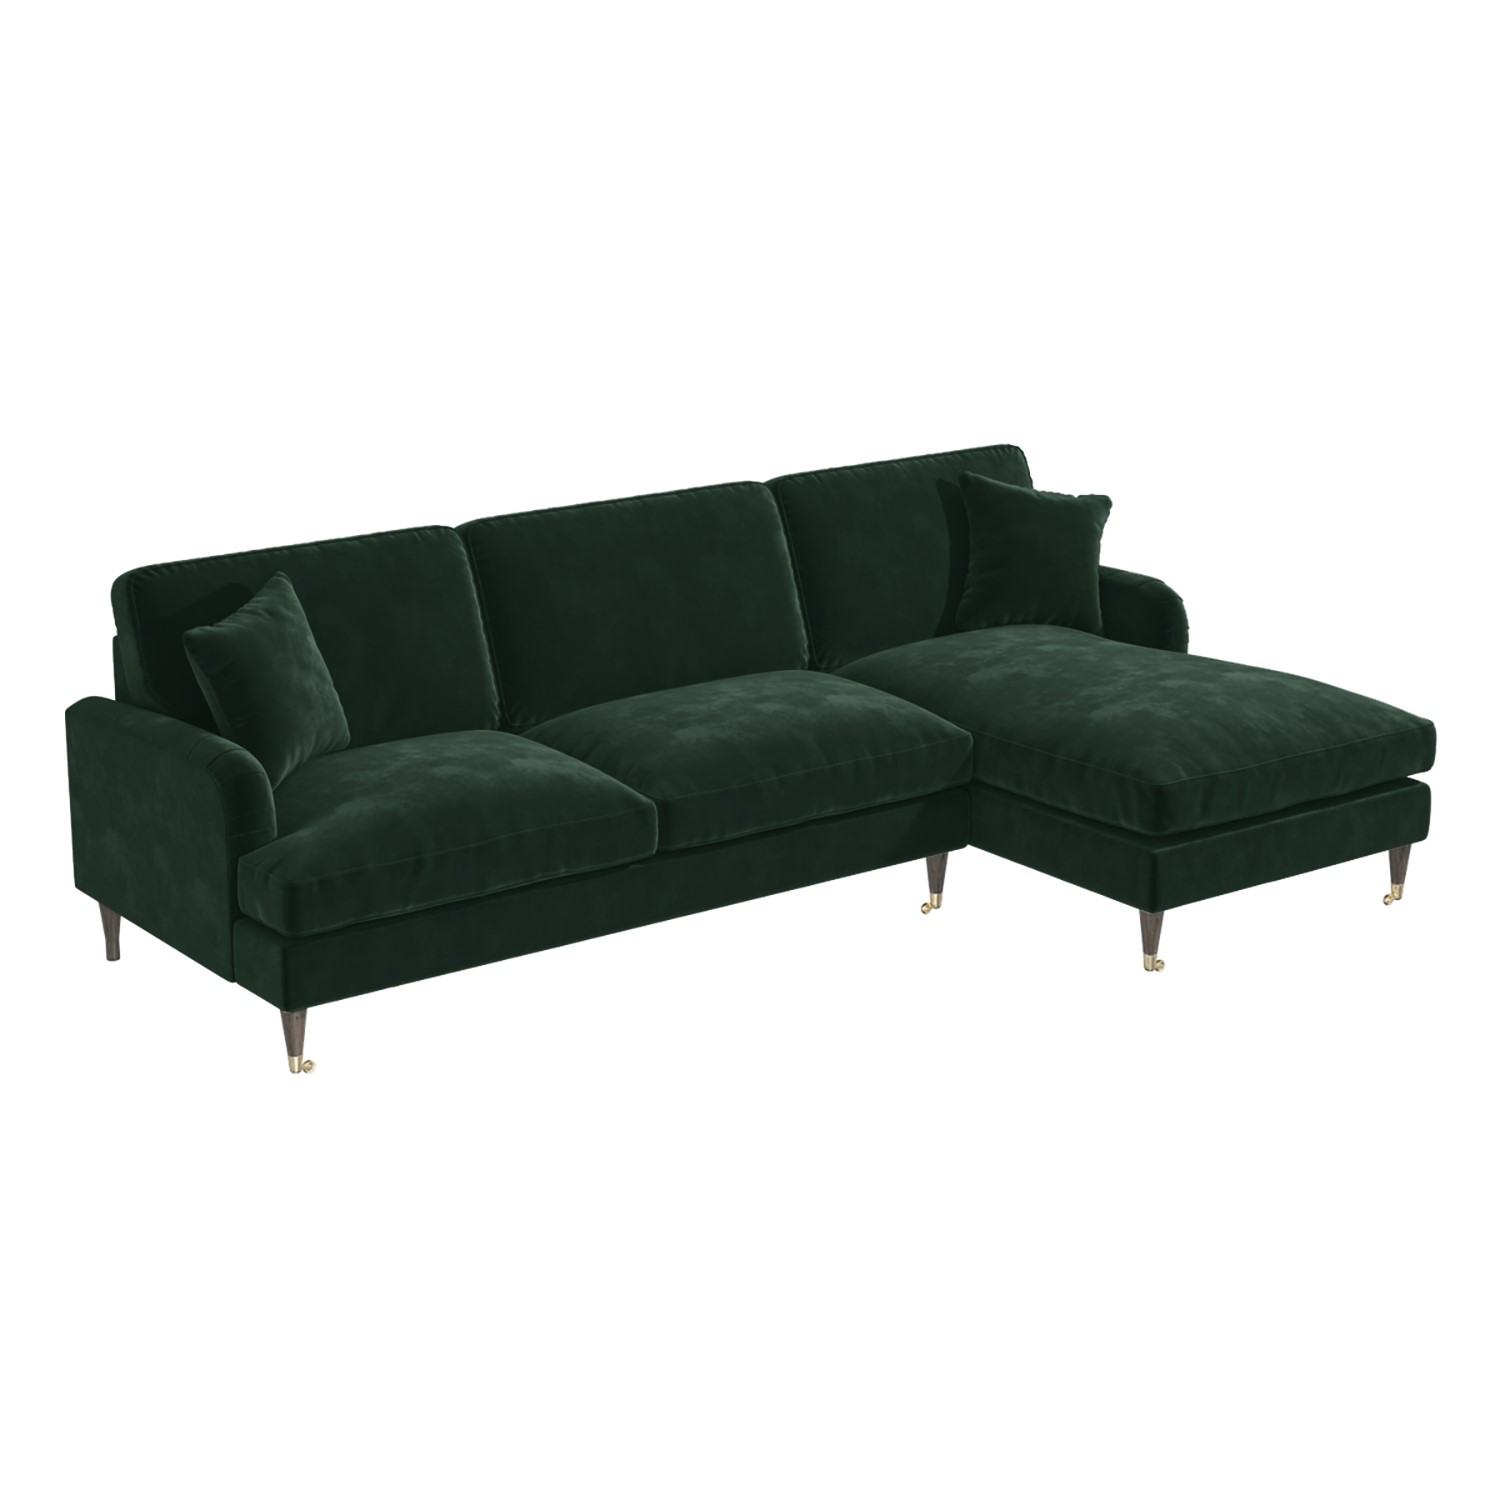 Photo of Dark green velvet right hand facing l shaped sofa - seats 4 - payton